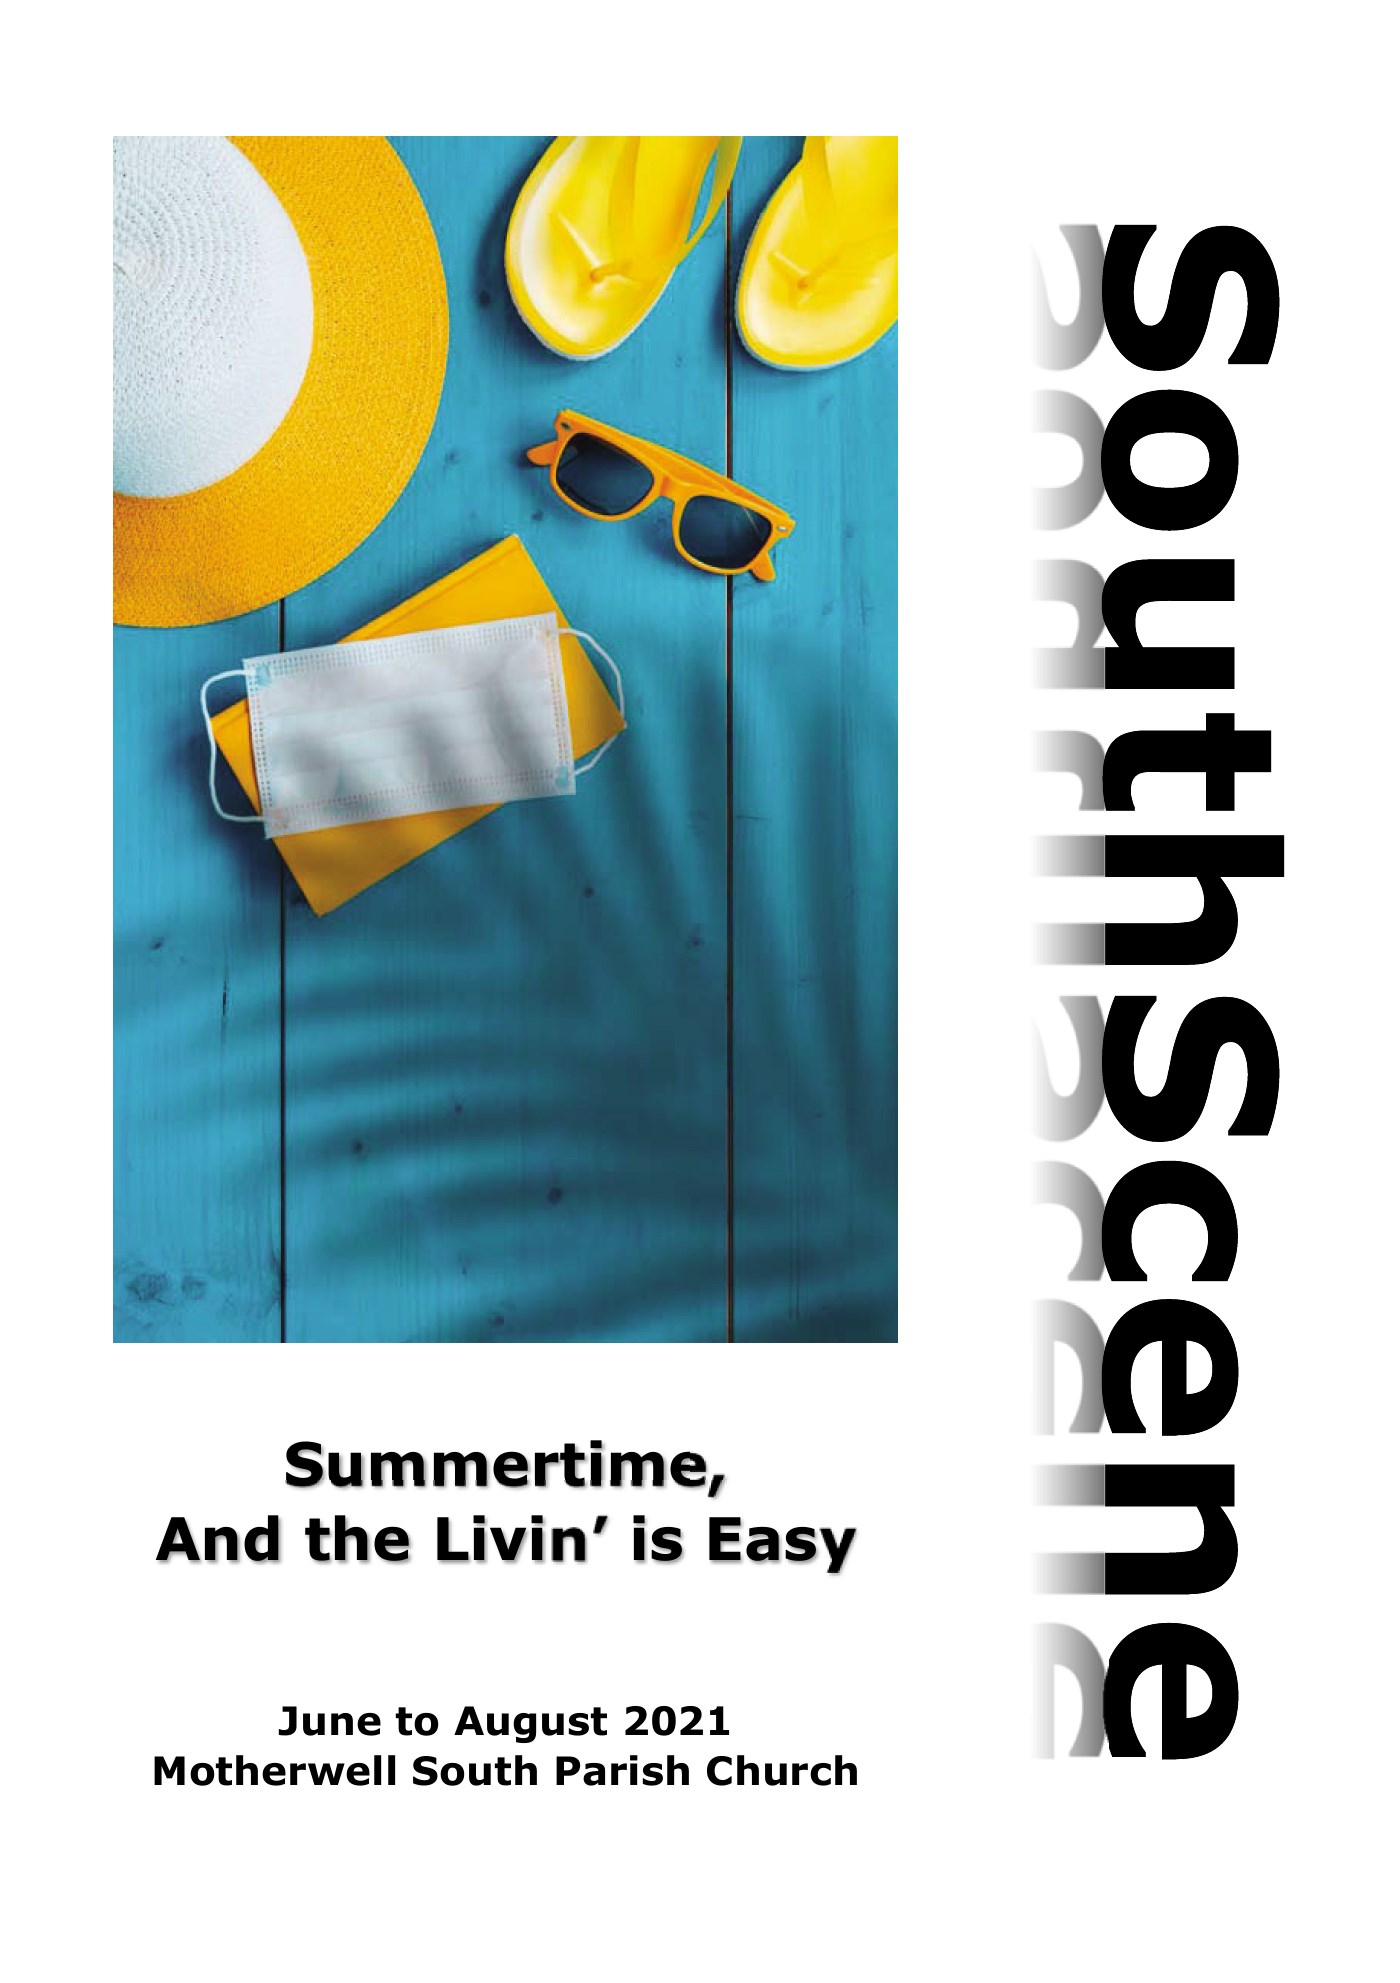 SouthScene: Summertime, And the Livin' is Easy